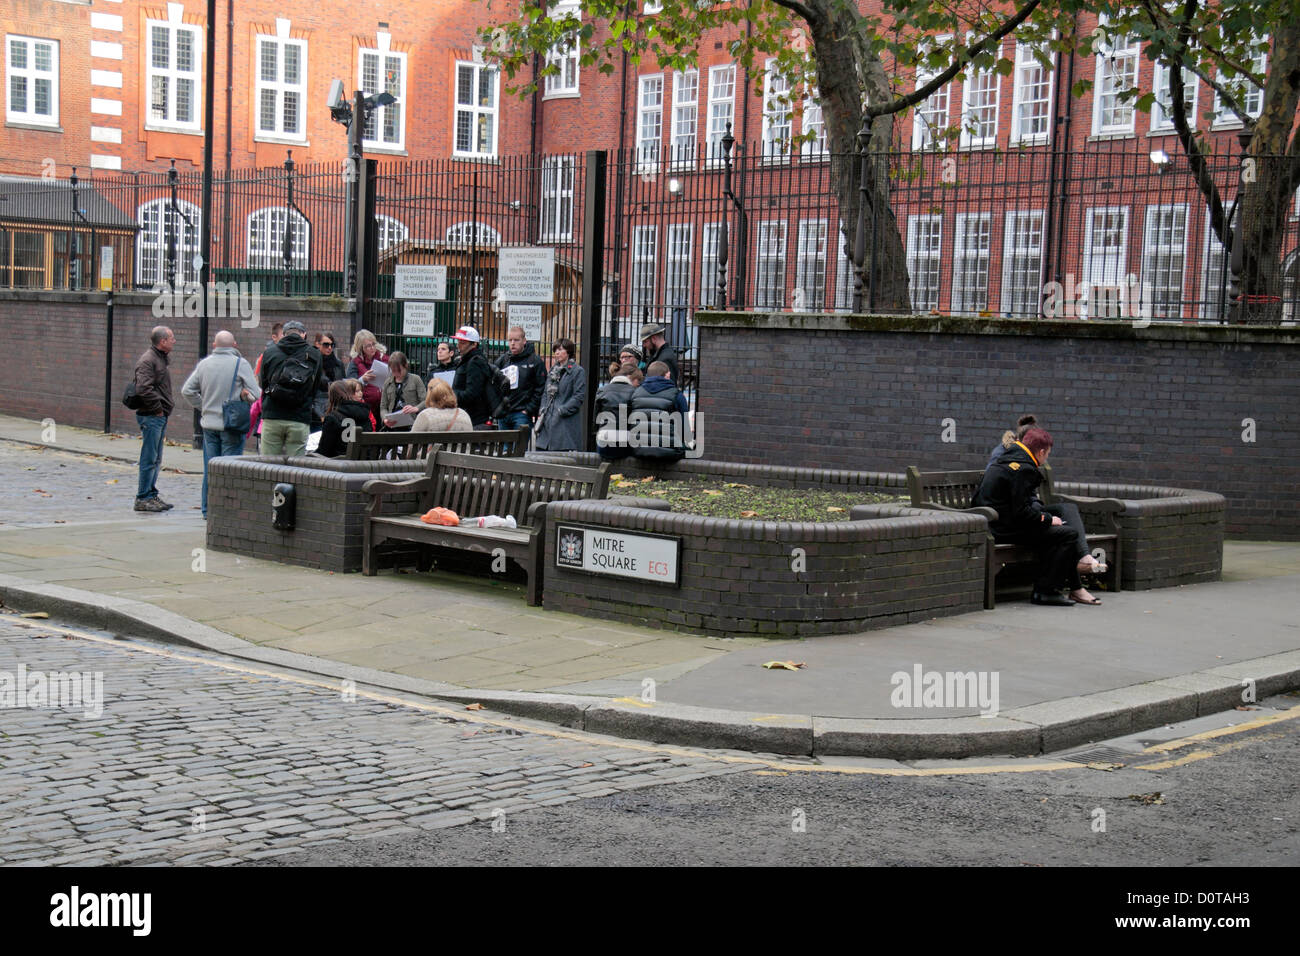 Plaza Mitre, La escena del crimen de Catherine Eddowes, Jack el Destripador La cuarta víctima, Whitechapel, East London, Reino Unido. (Vea las notas) Foto de stock